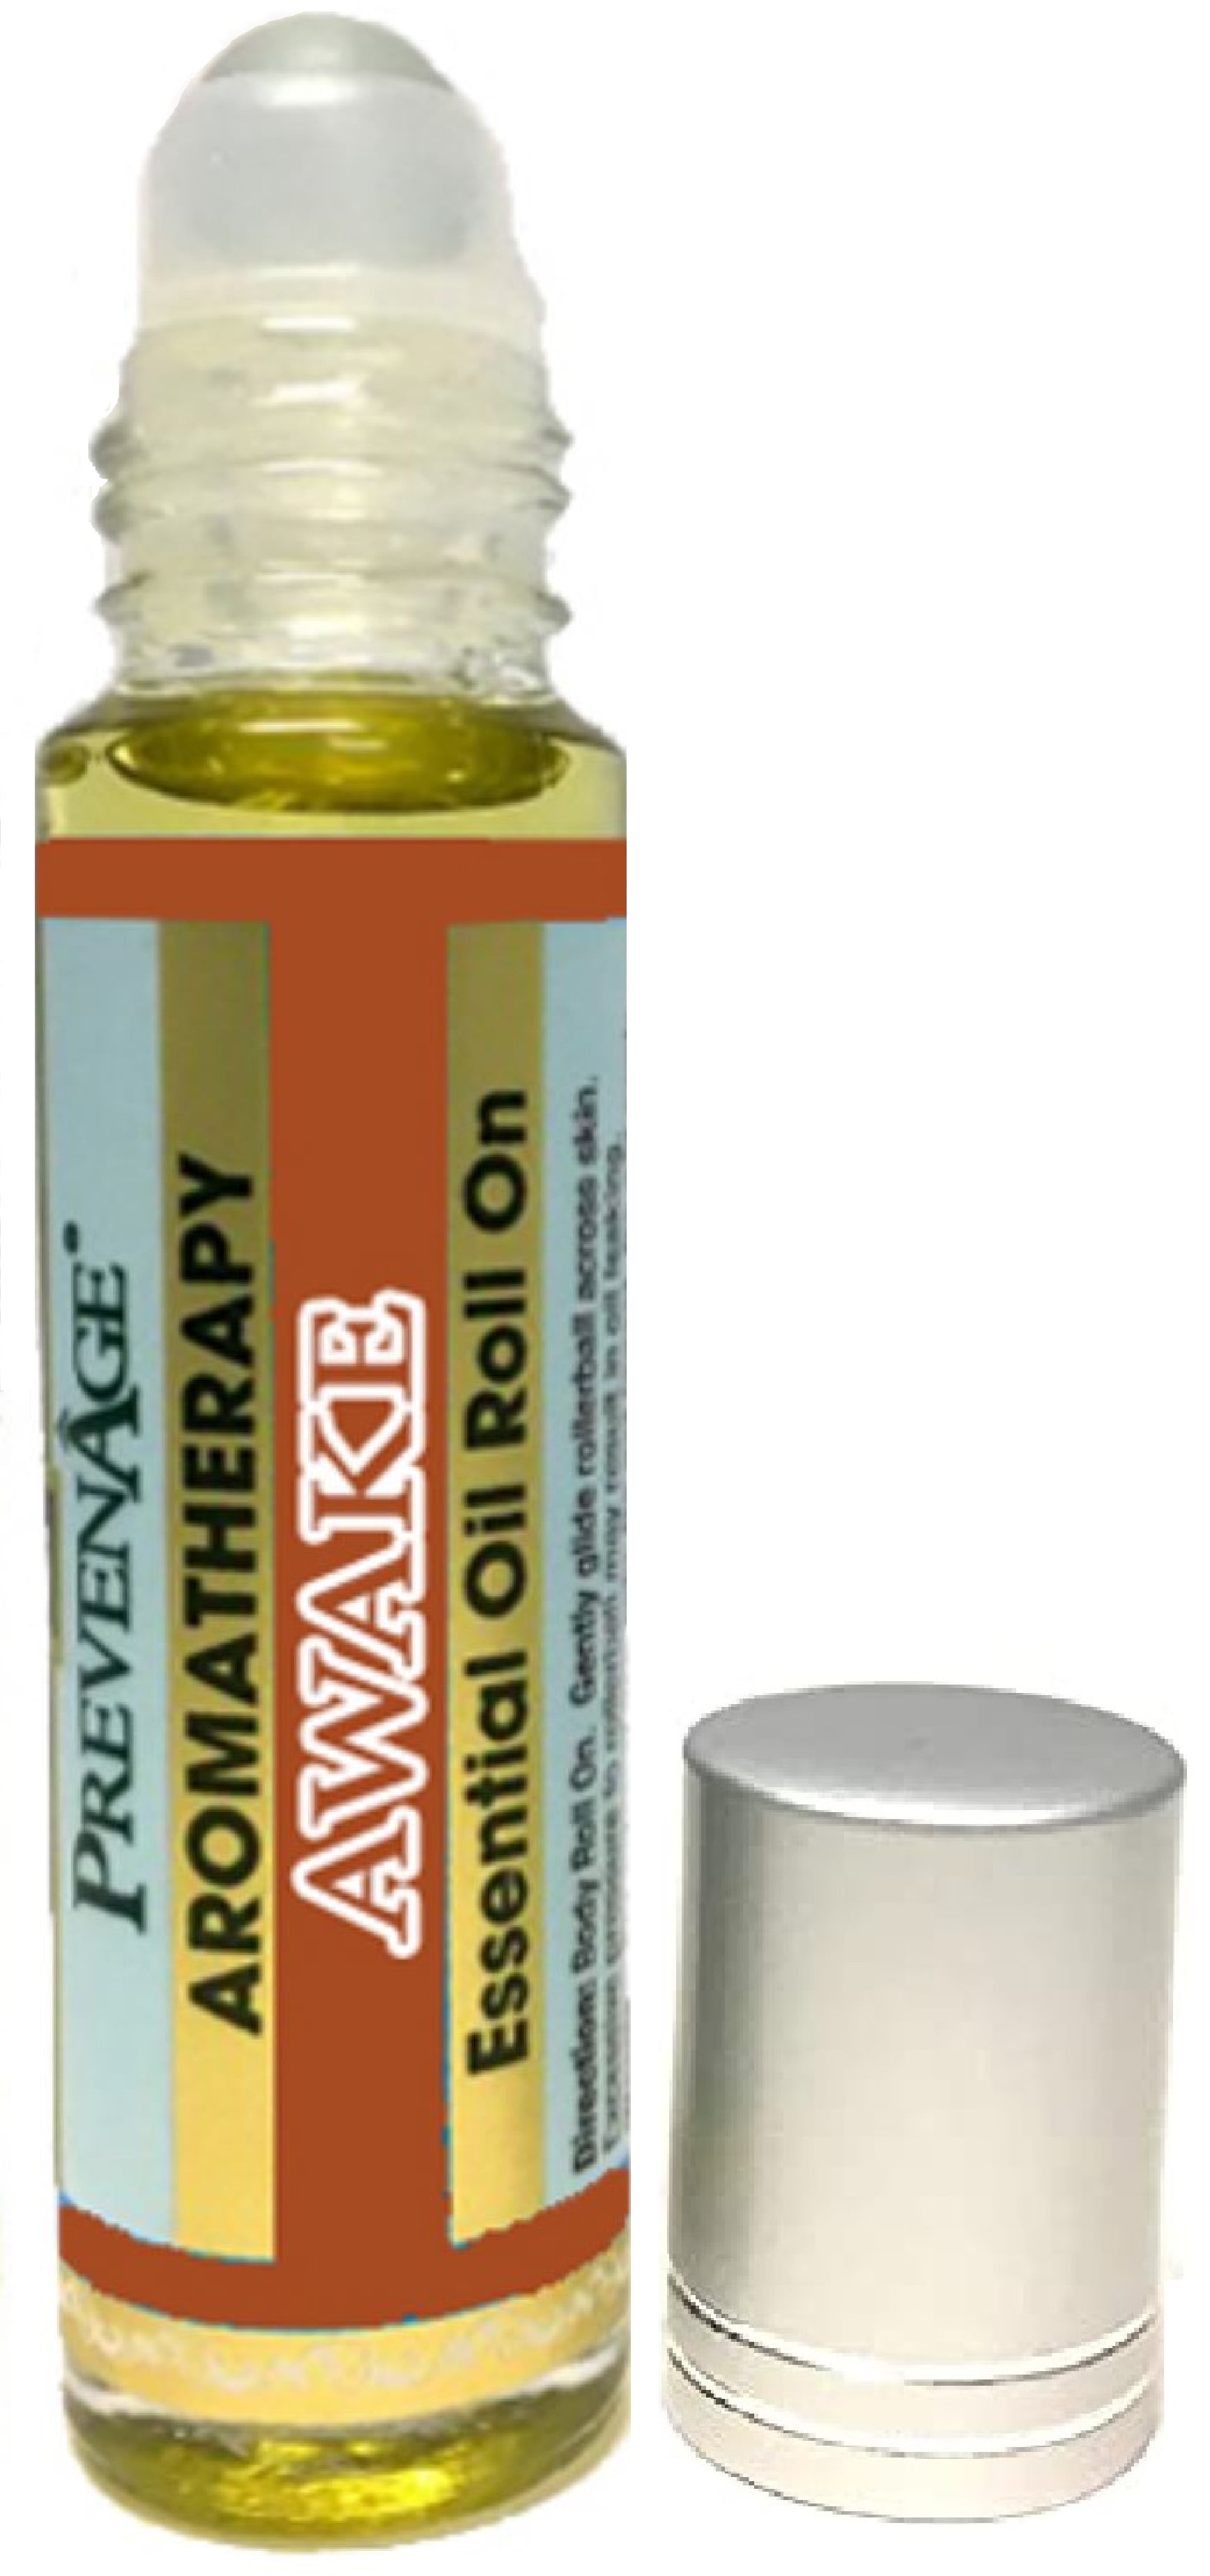 Plantlife Essential Oil, Awake - 0.33 oz